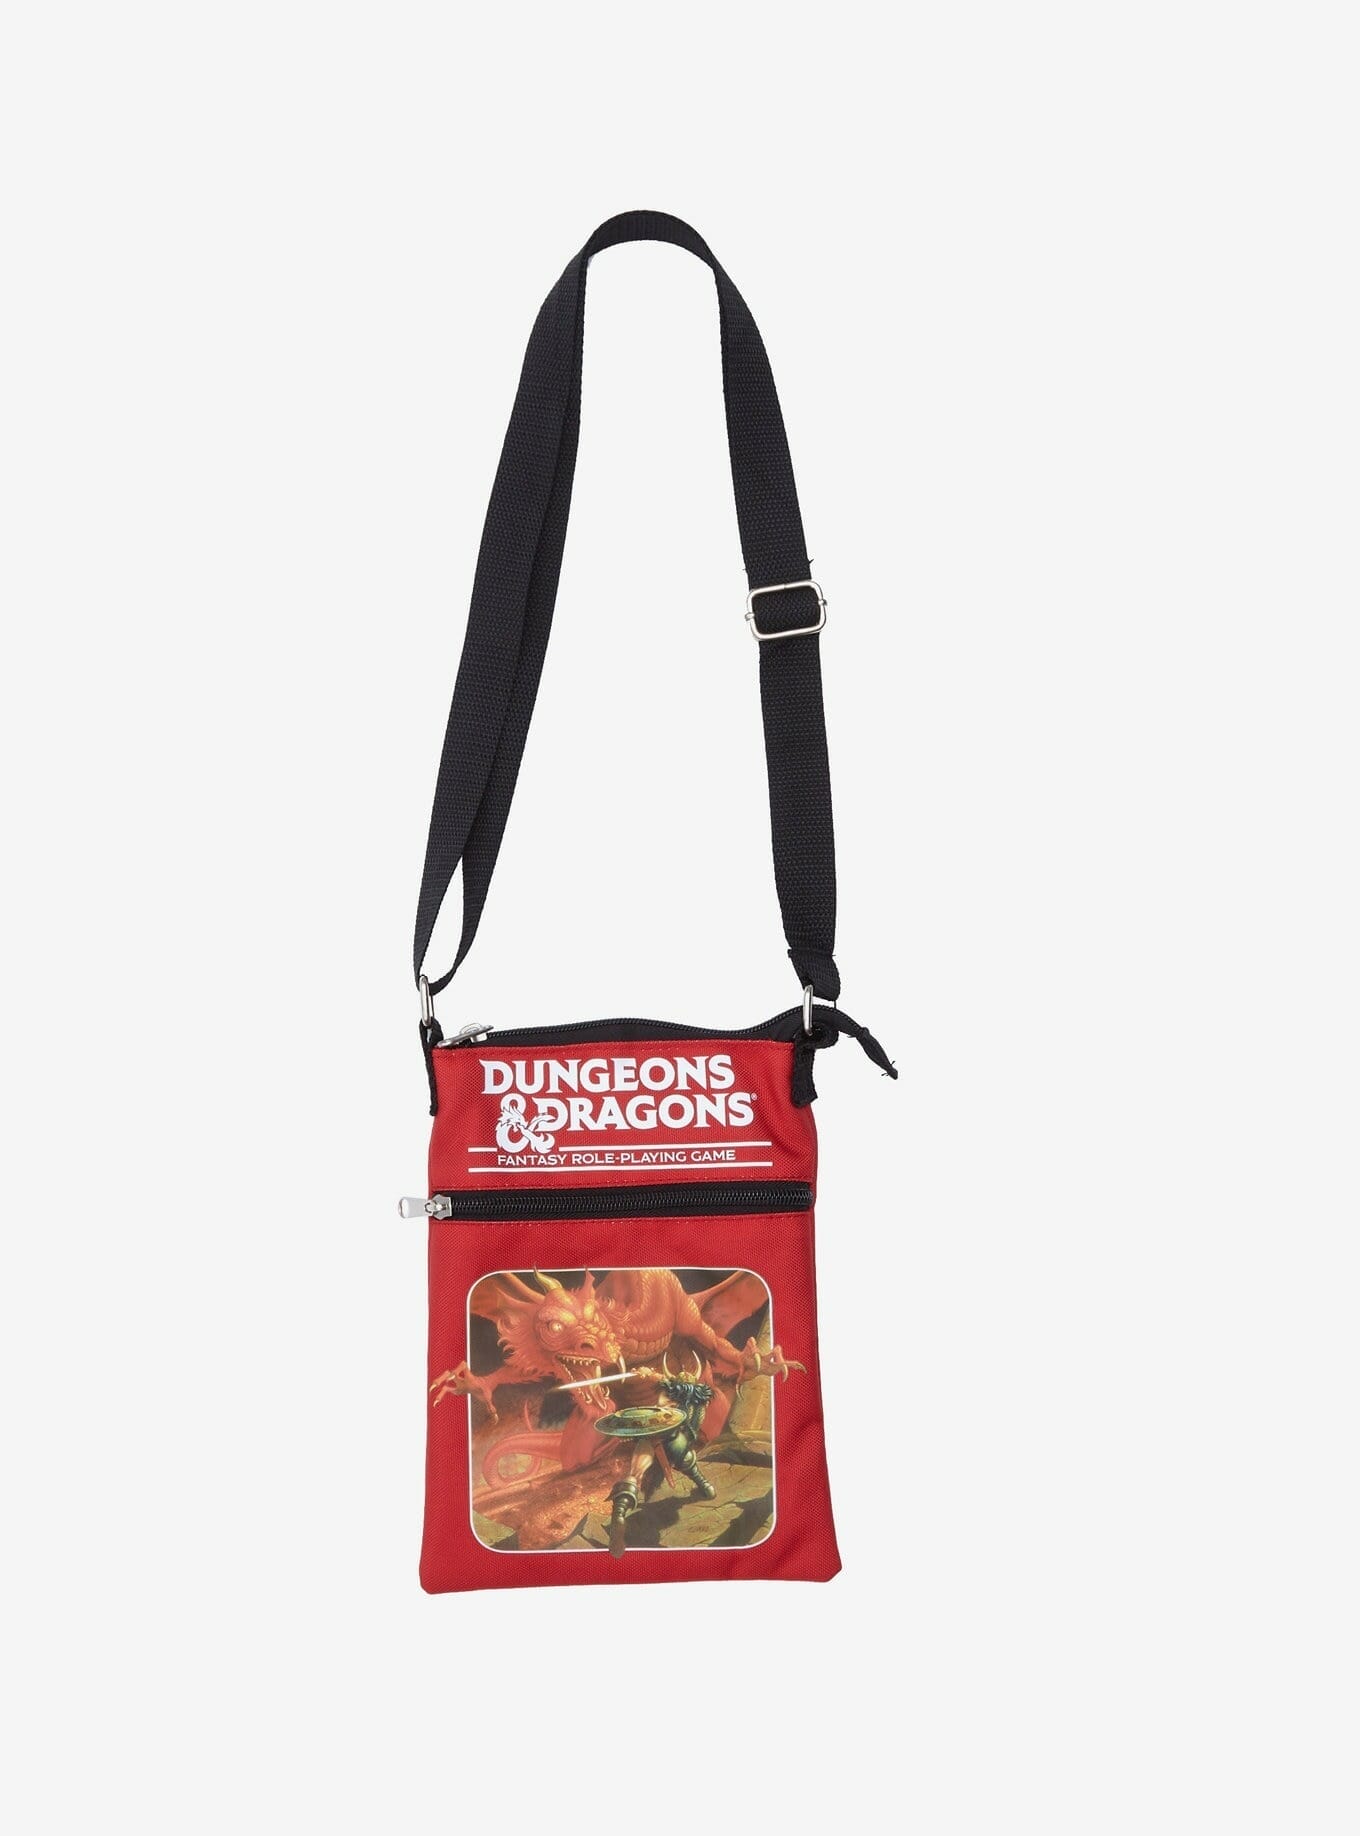 Dungeons & Dragons crossbody bag